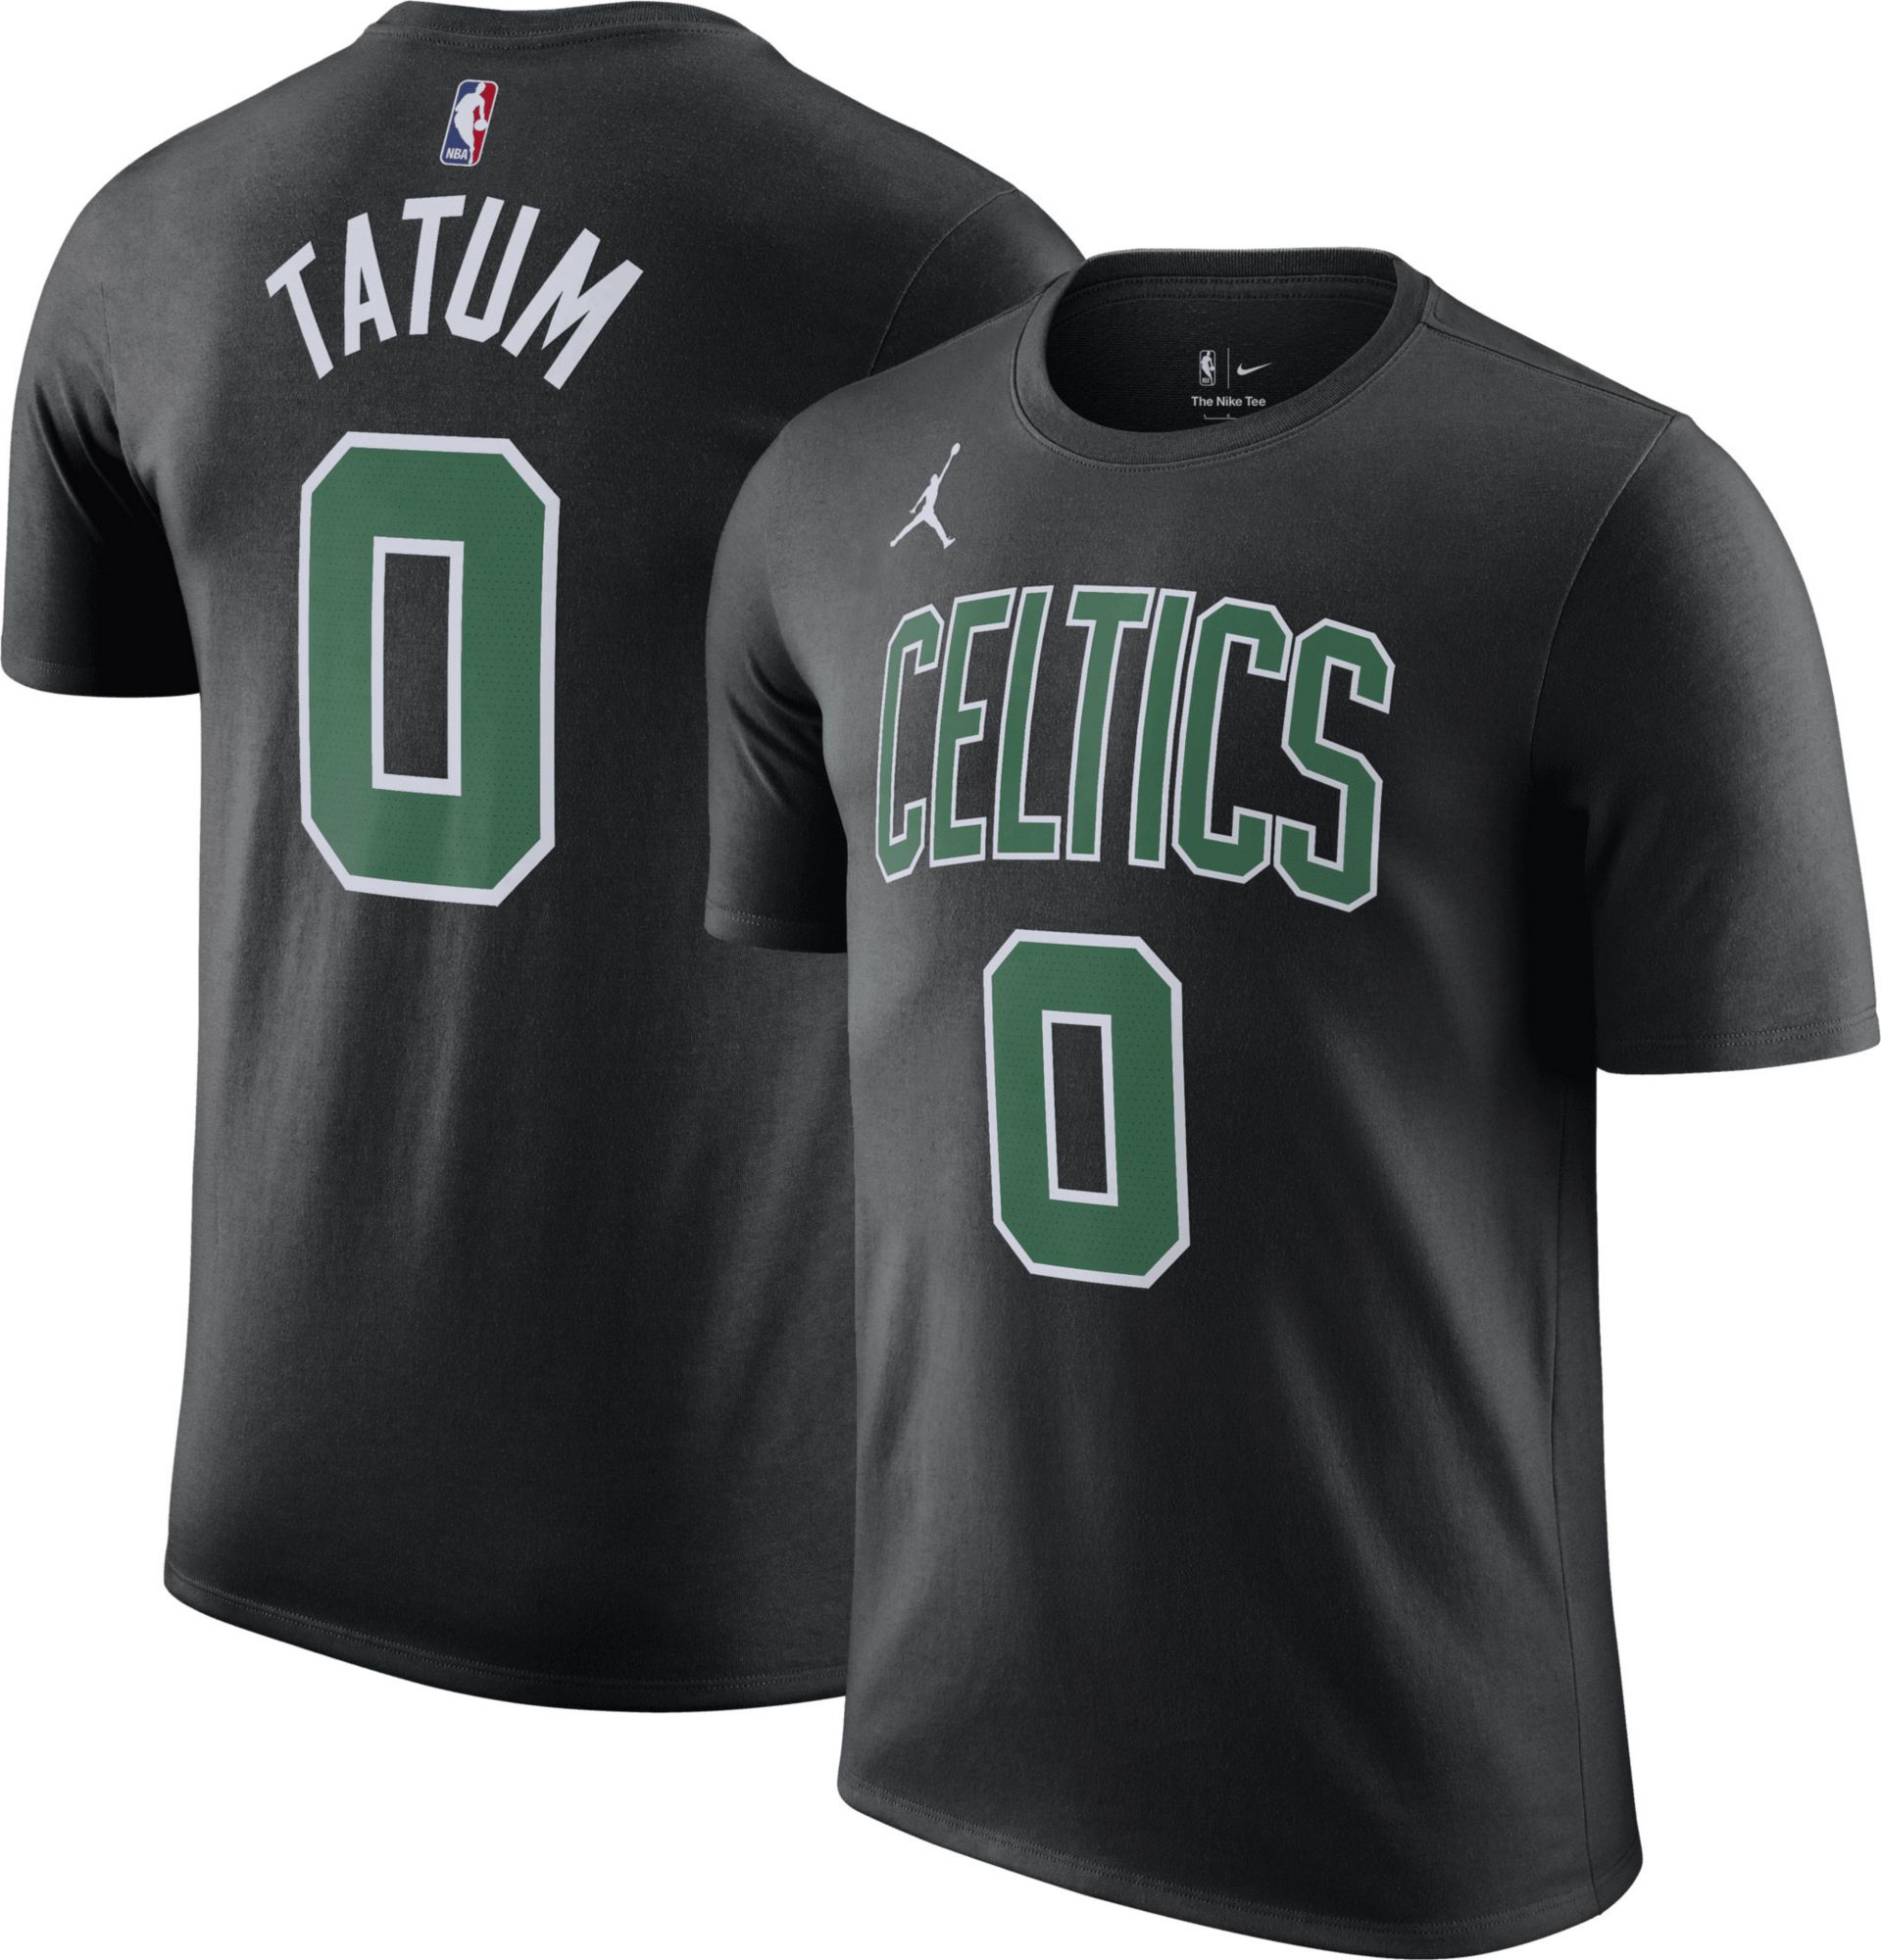 Boston Celtics Nike Mantra T-Shirt - Clover - Mens